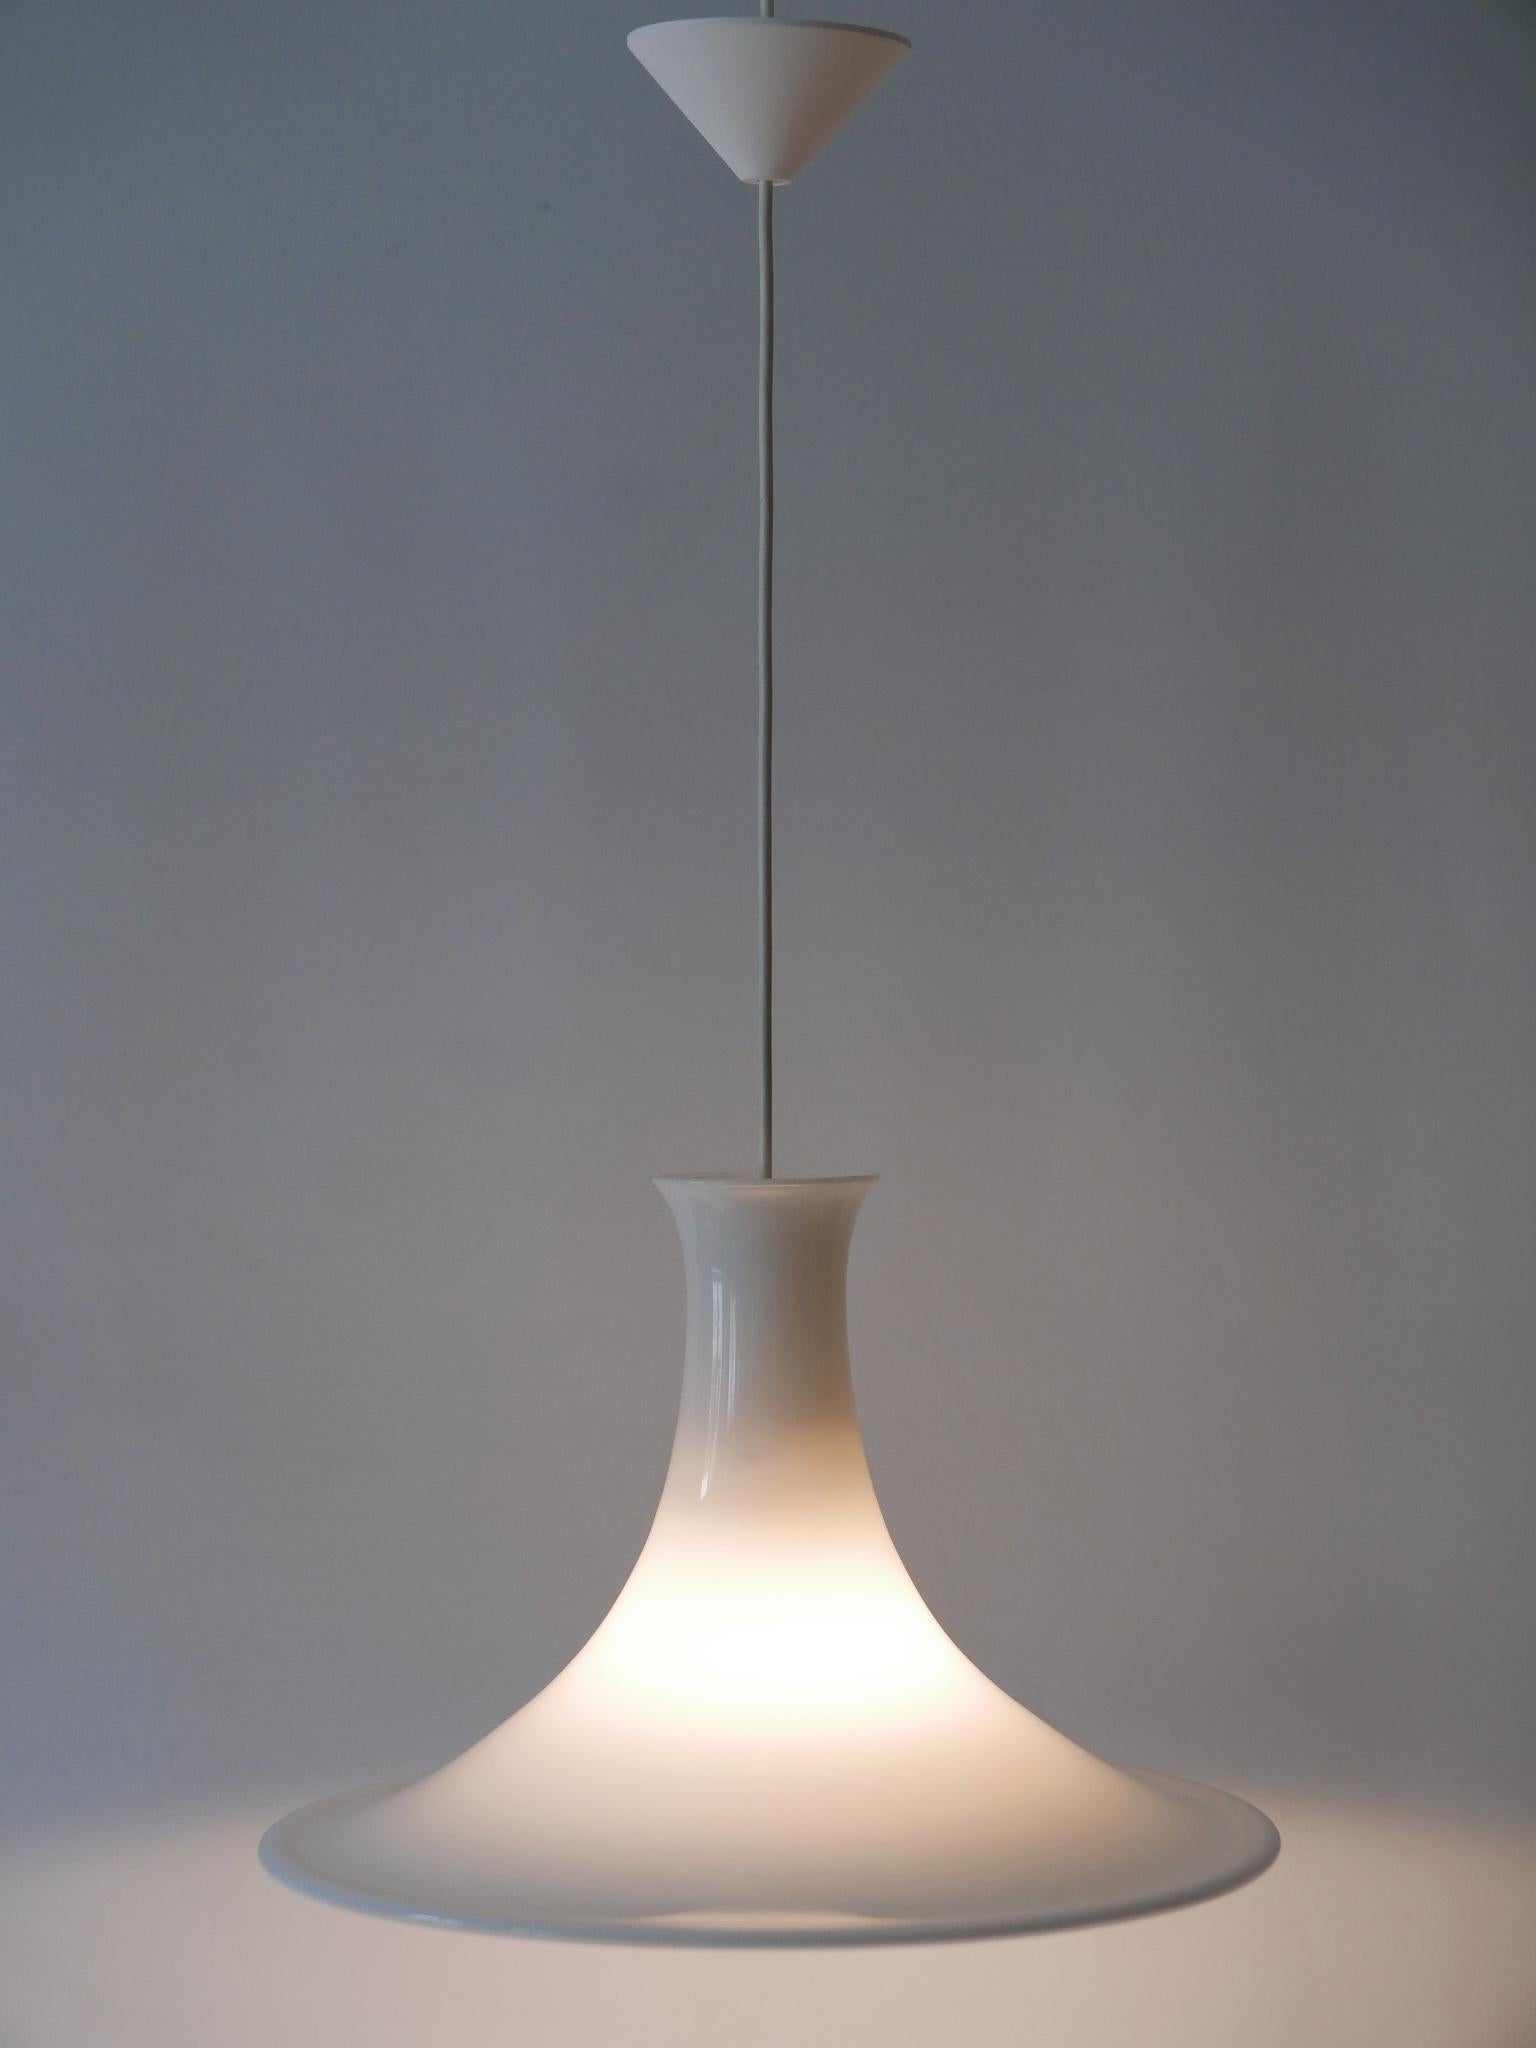 Mandarin Pendant Lamp by Michael Bang Für Holmegaard/Royal Copenhagen 1980s In Good Condition For Sale In Munich, DE